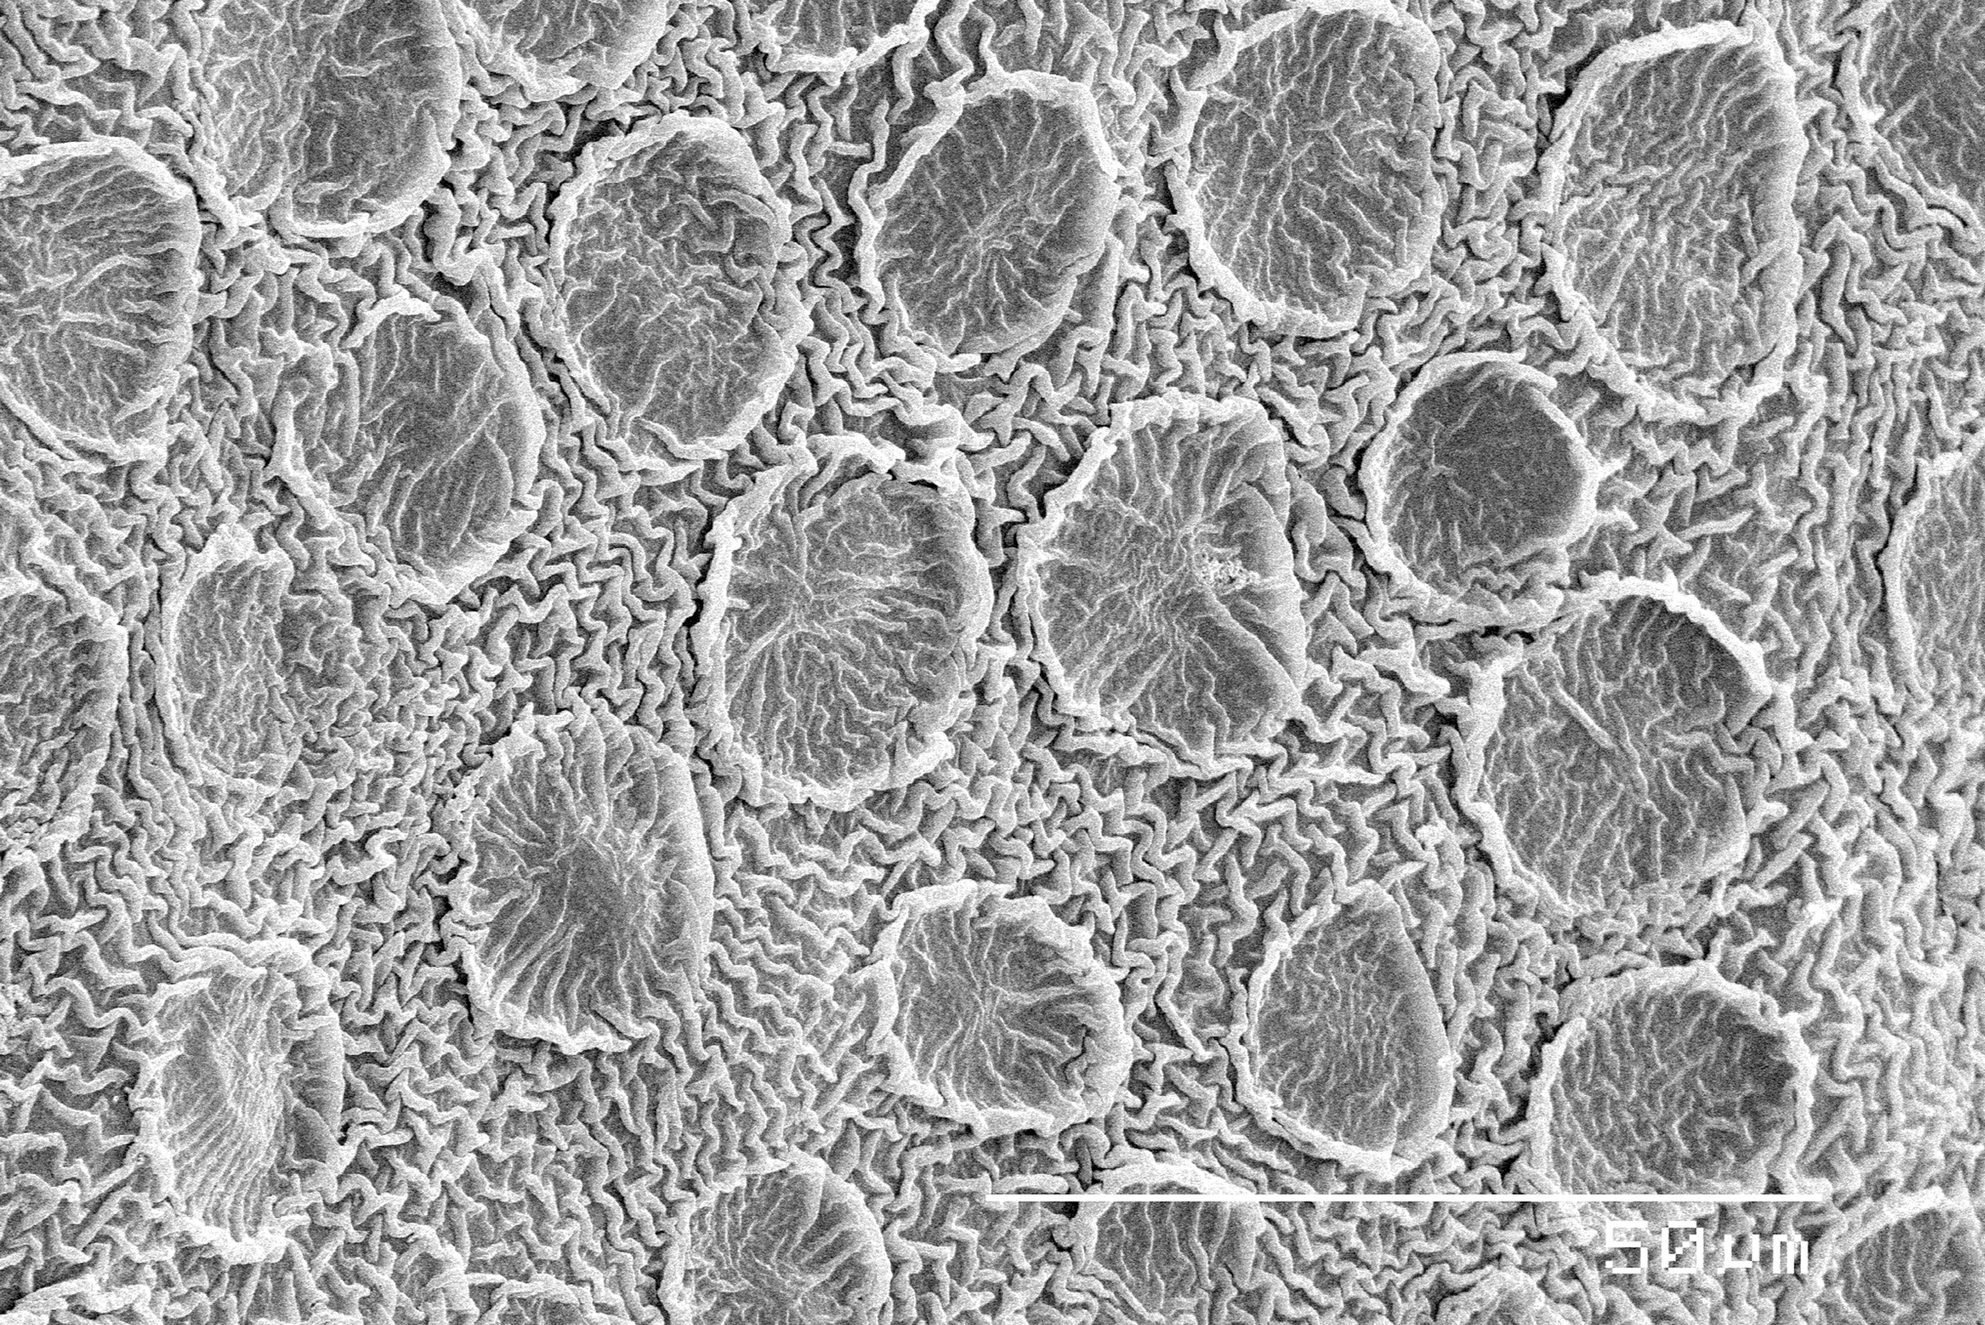 SEM Micrograph of a glands on rose petal